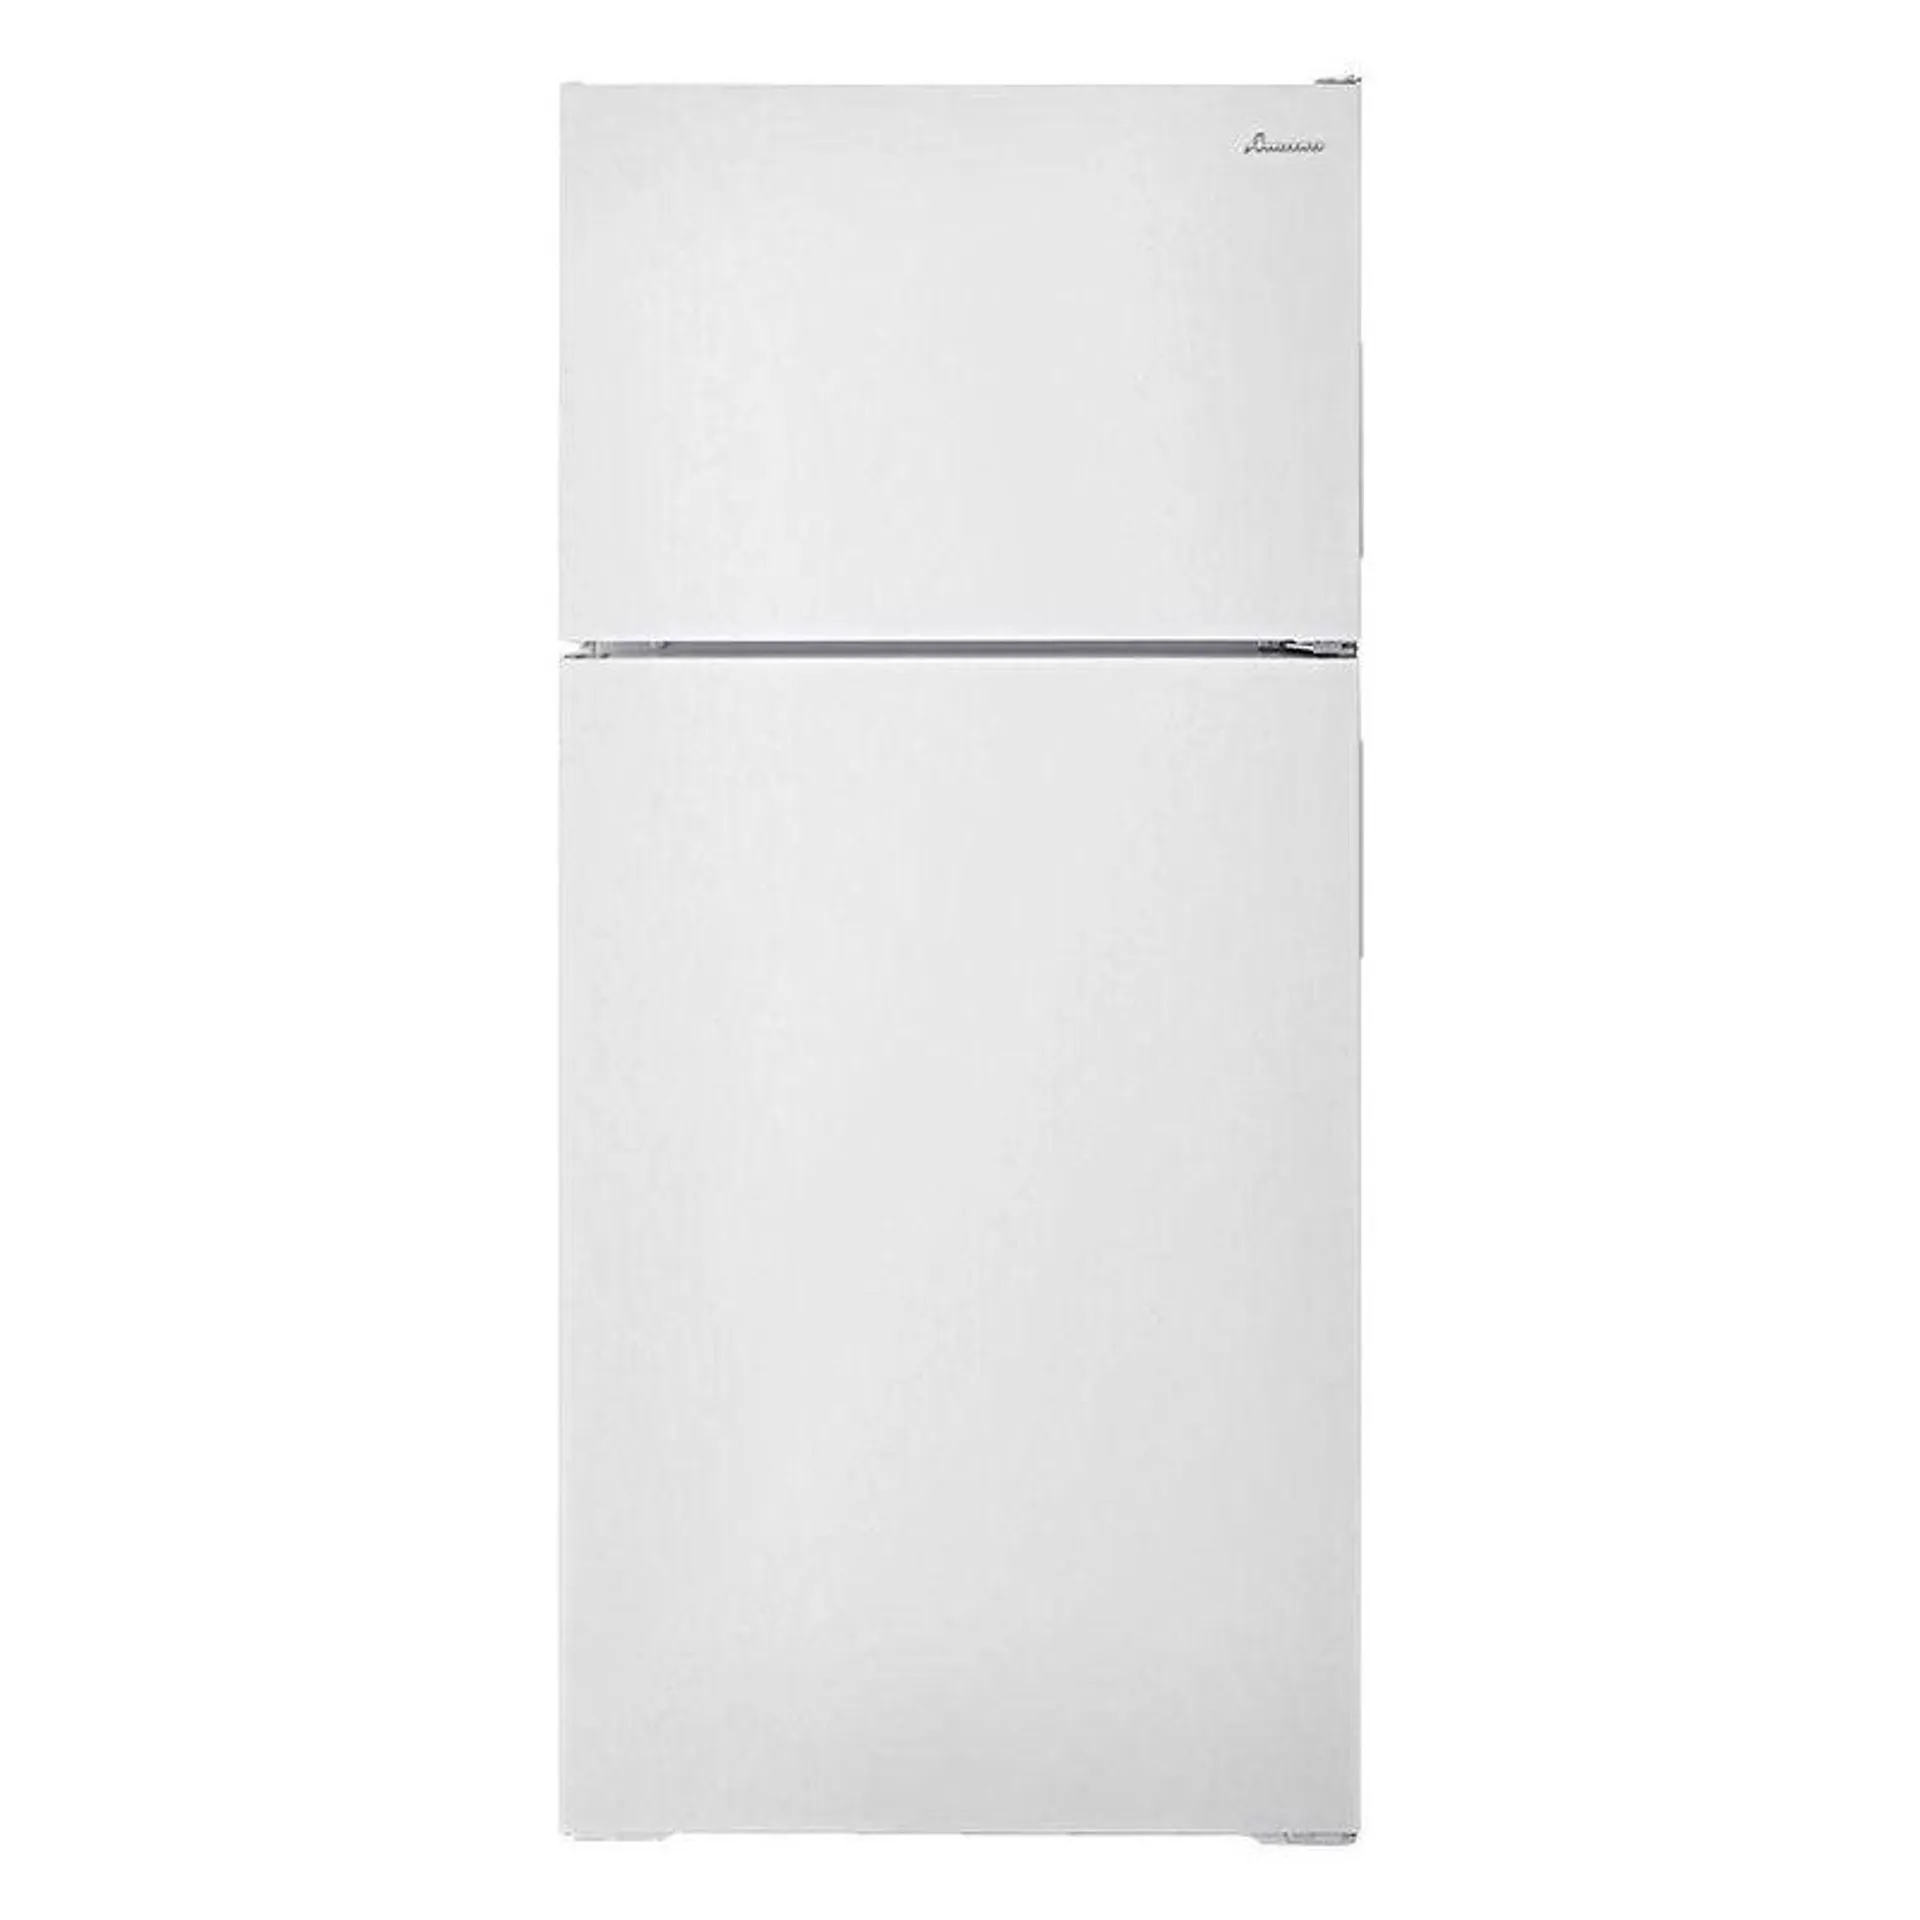 Amana 28 in. 14.3 cu. ft. Top Refrigerator - White